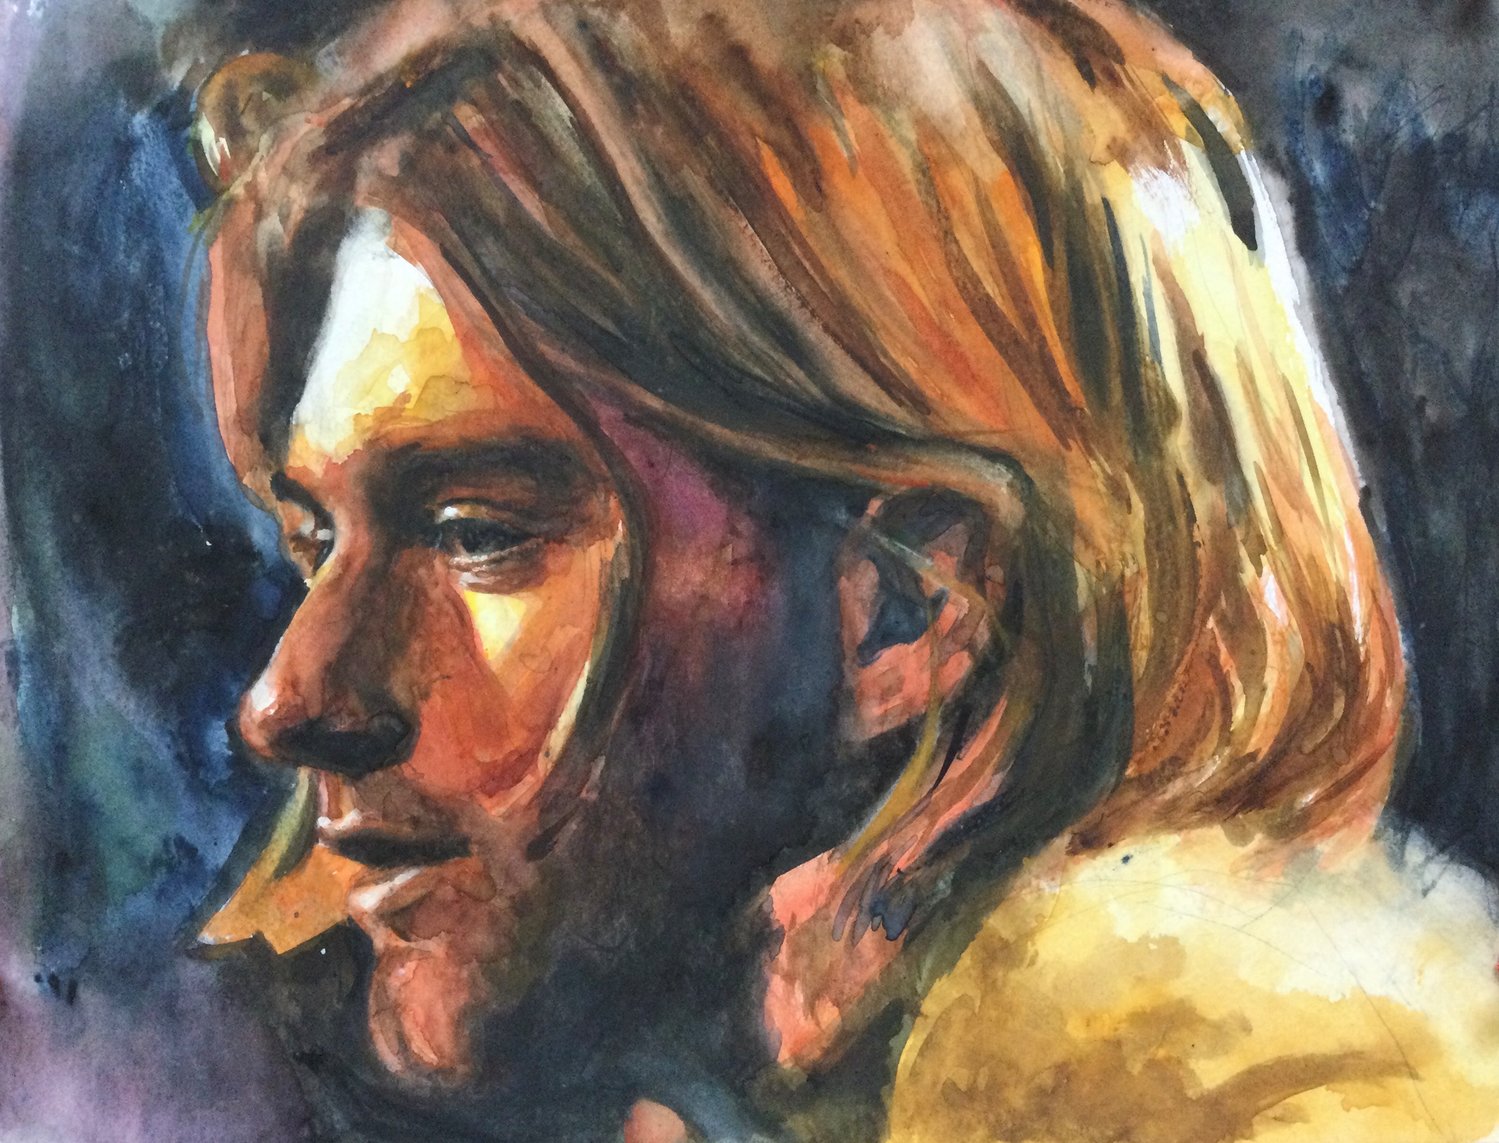 "Cobain" is by Renata Pugh.